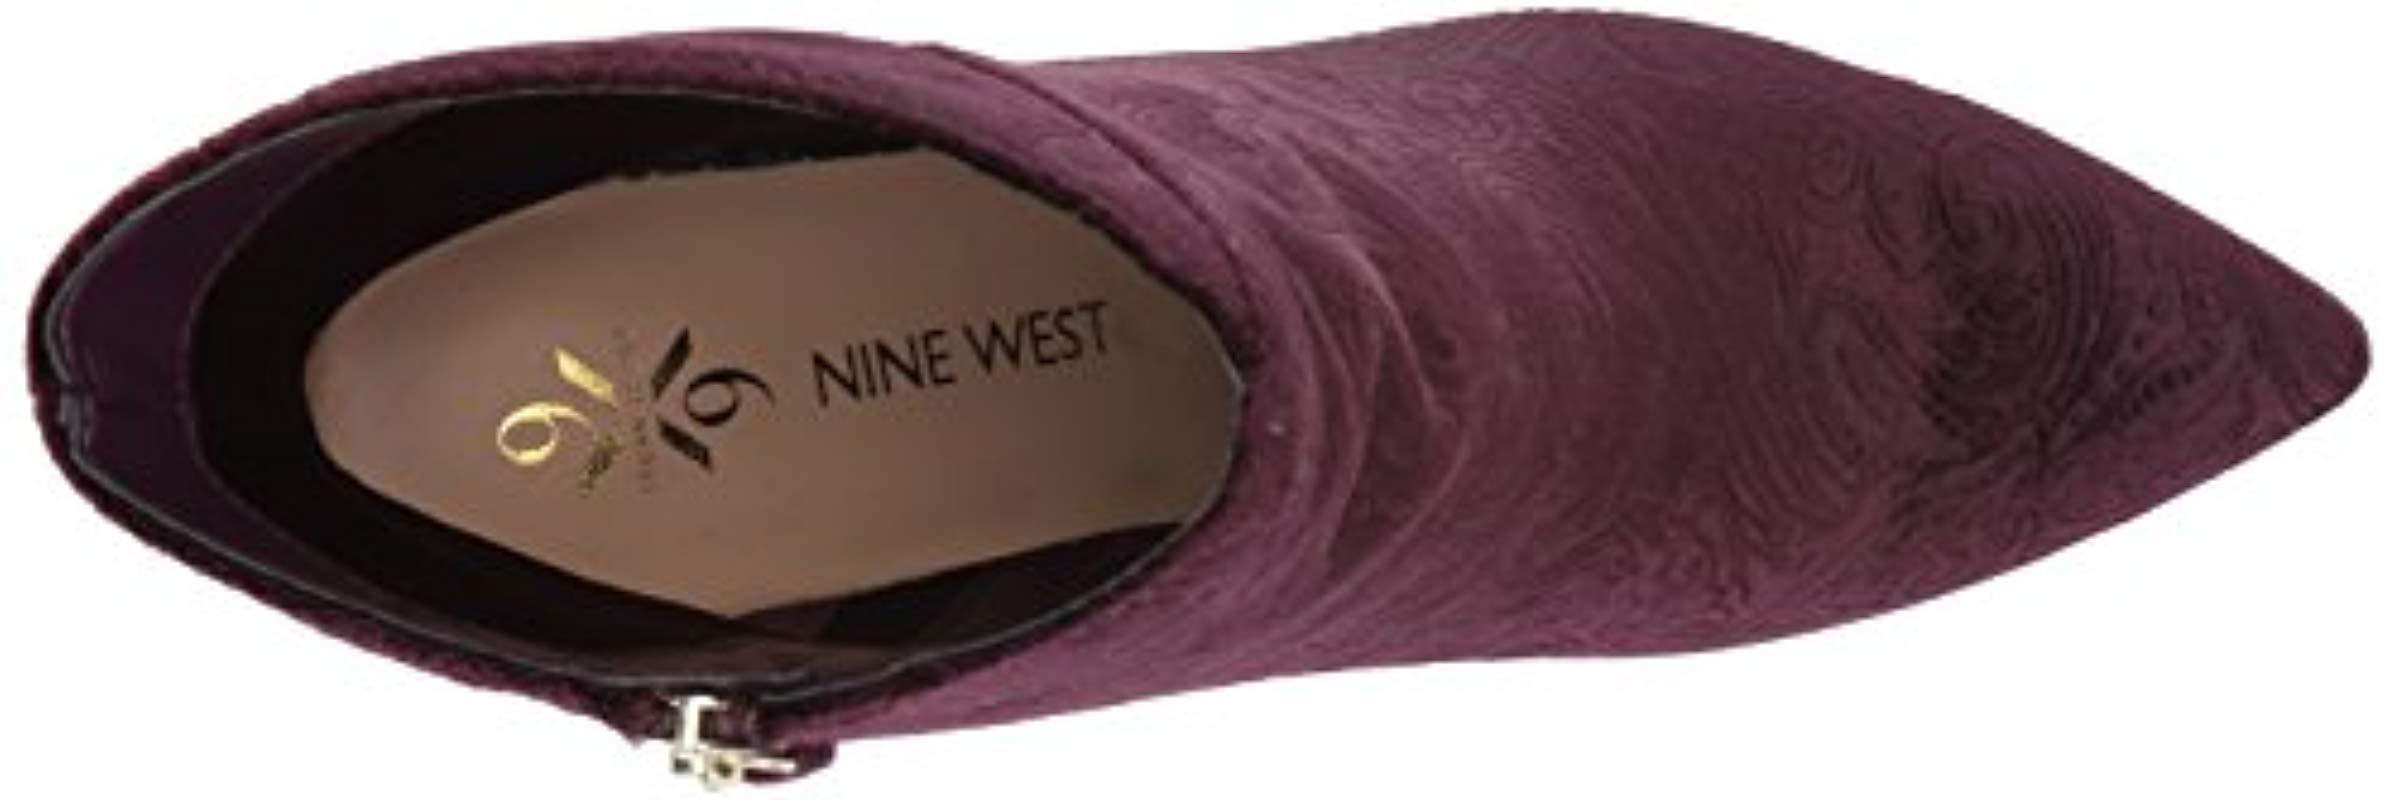 nine west argyle boot